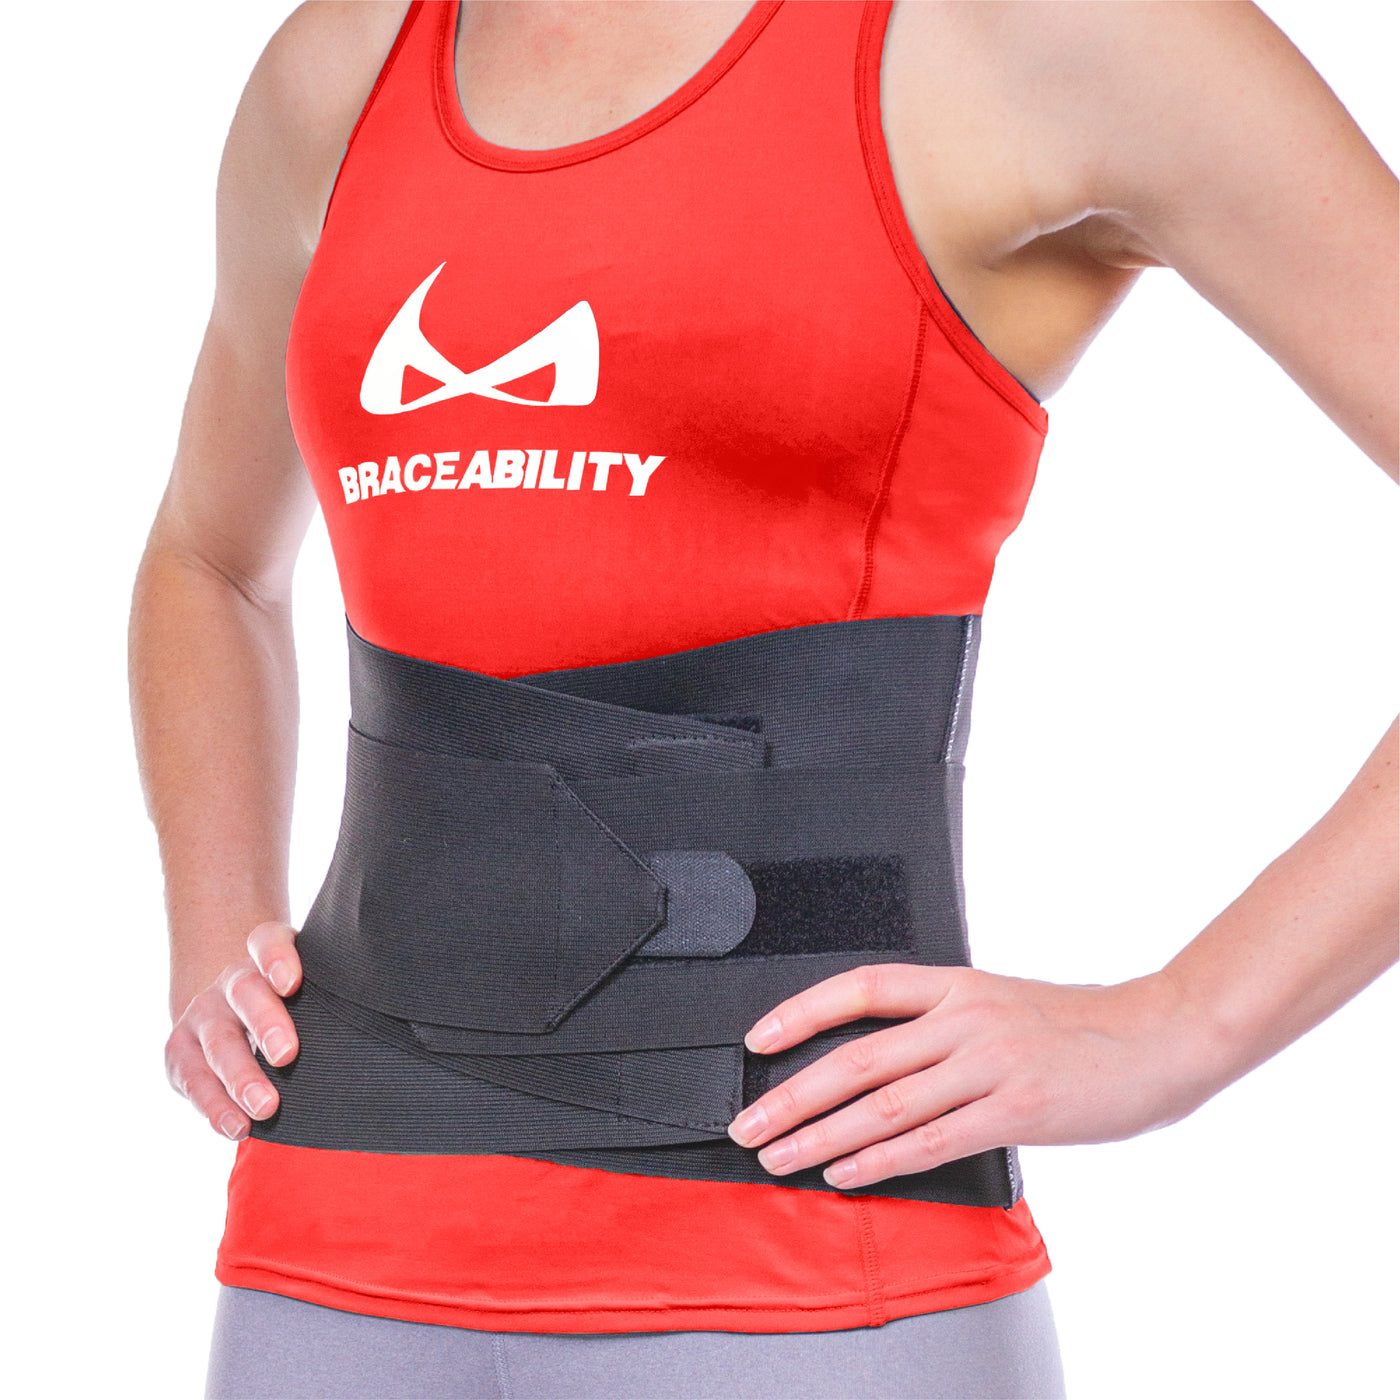 8 Lumbar / Back Support ideas  lumbar, supportive, back pain